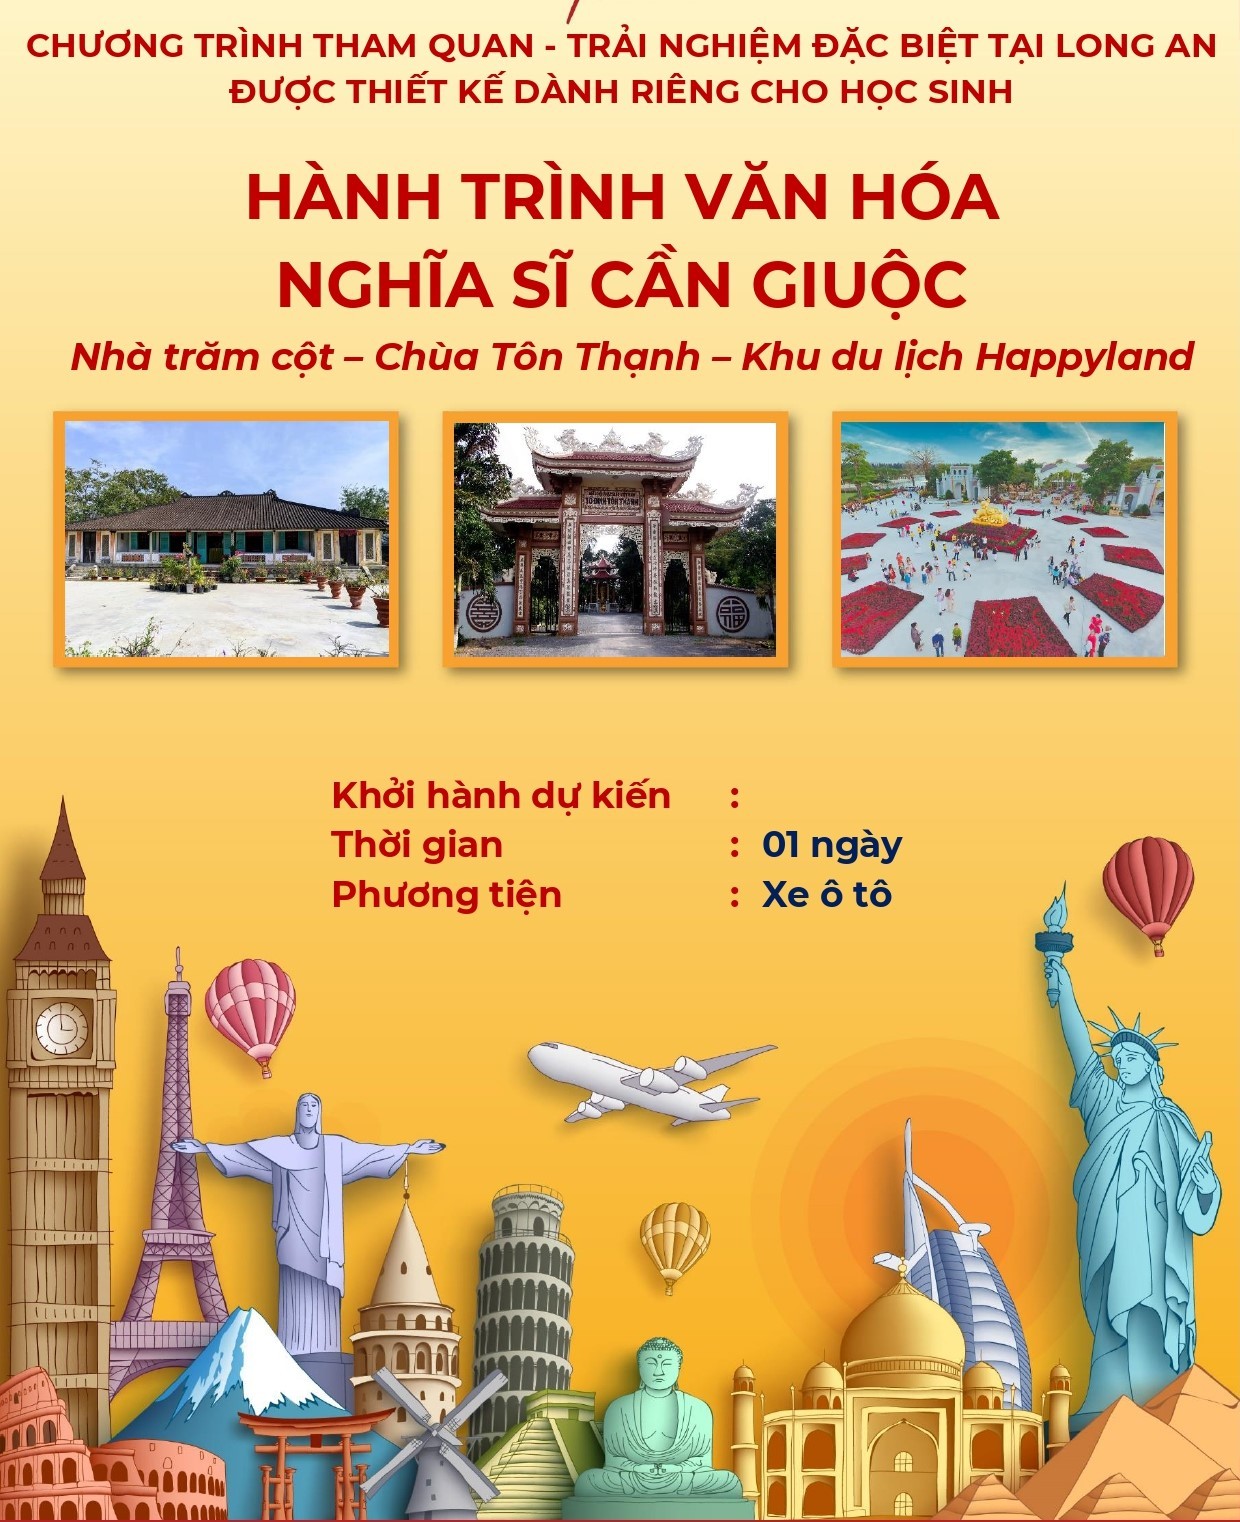 gst-la09-chuatonthanh-nhatramcot-happyland-page-0001-1695308549.jpg